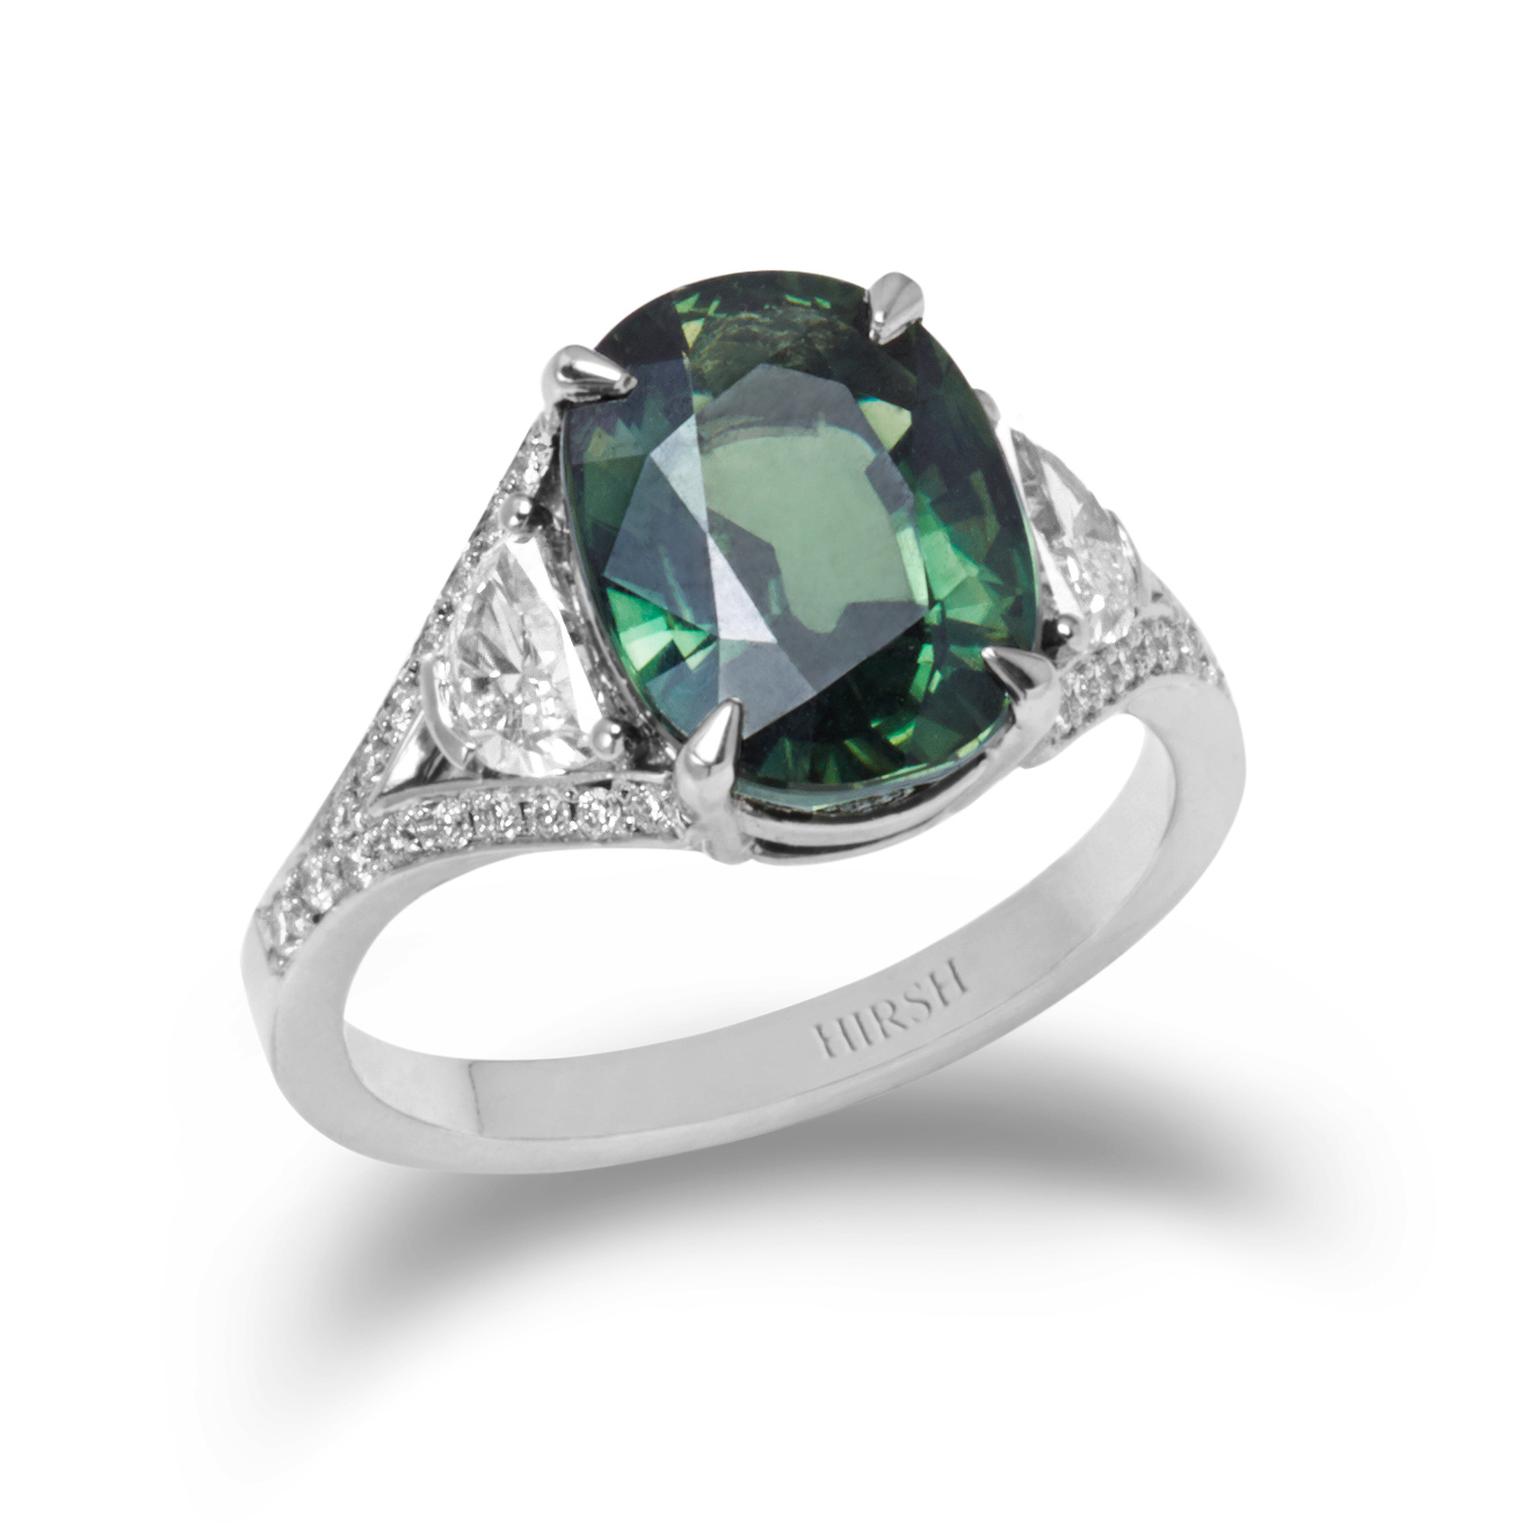 Hirsh-green-sapphire-engagement-ring